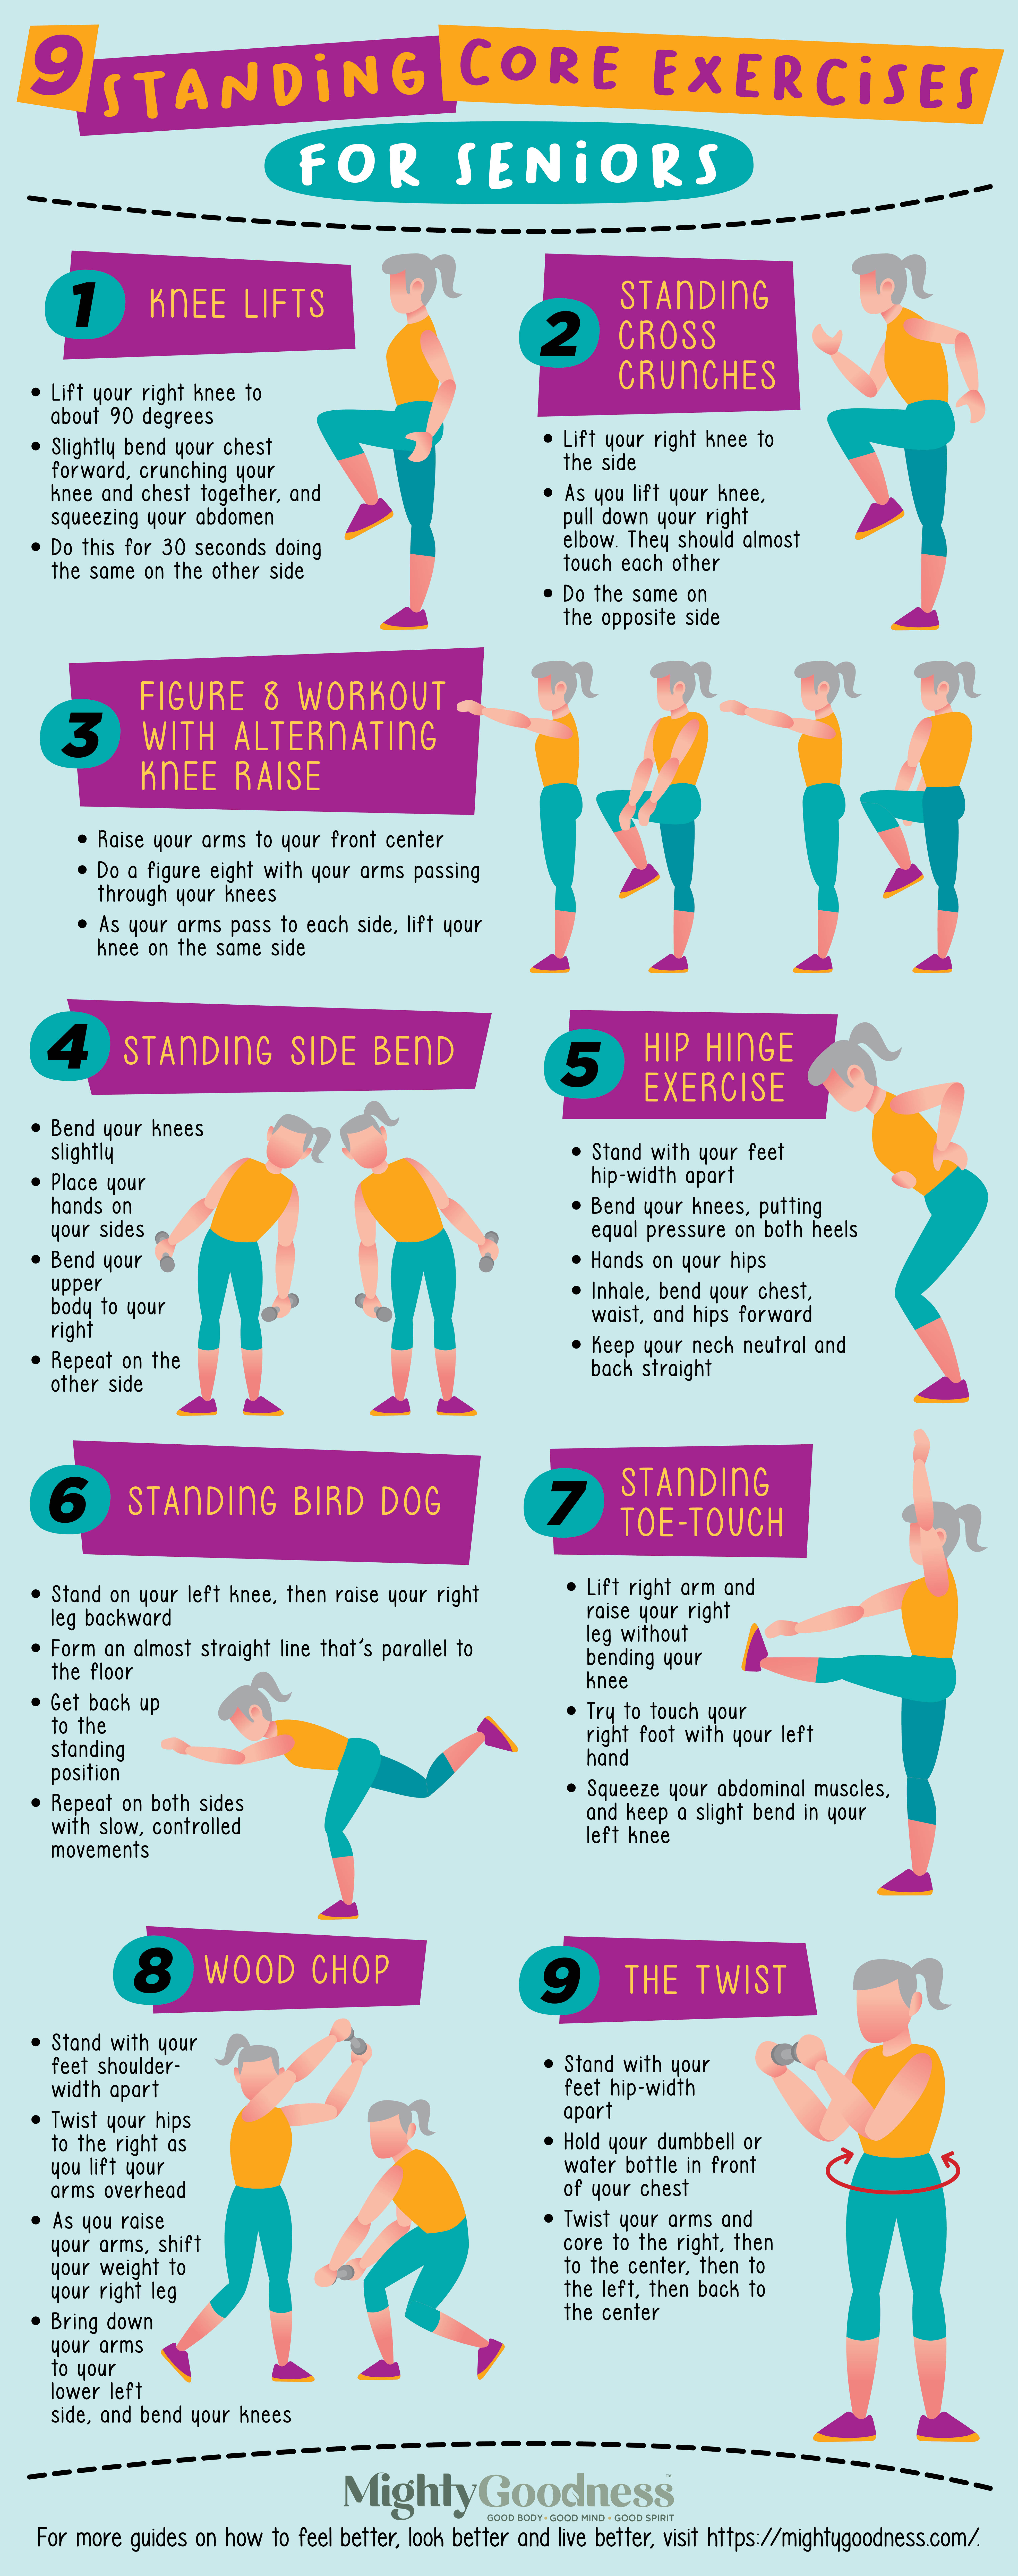 9 Standing Core Exercises For Seniors